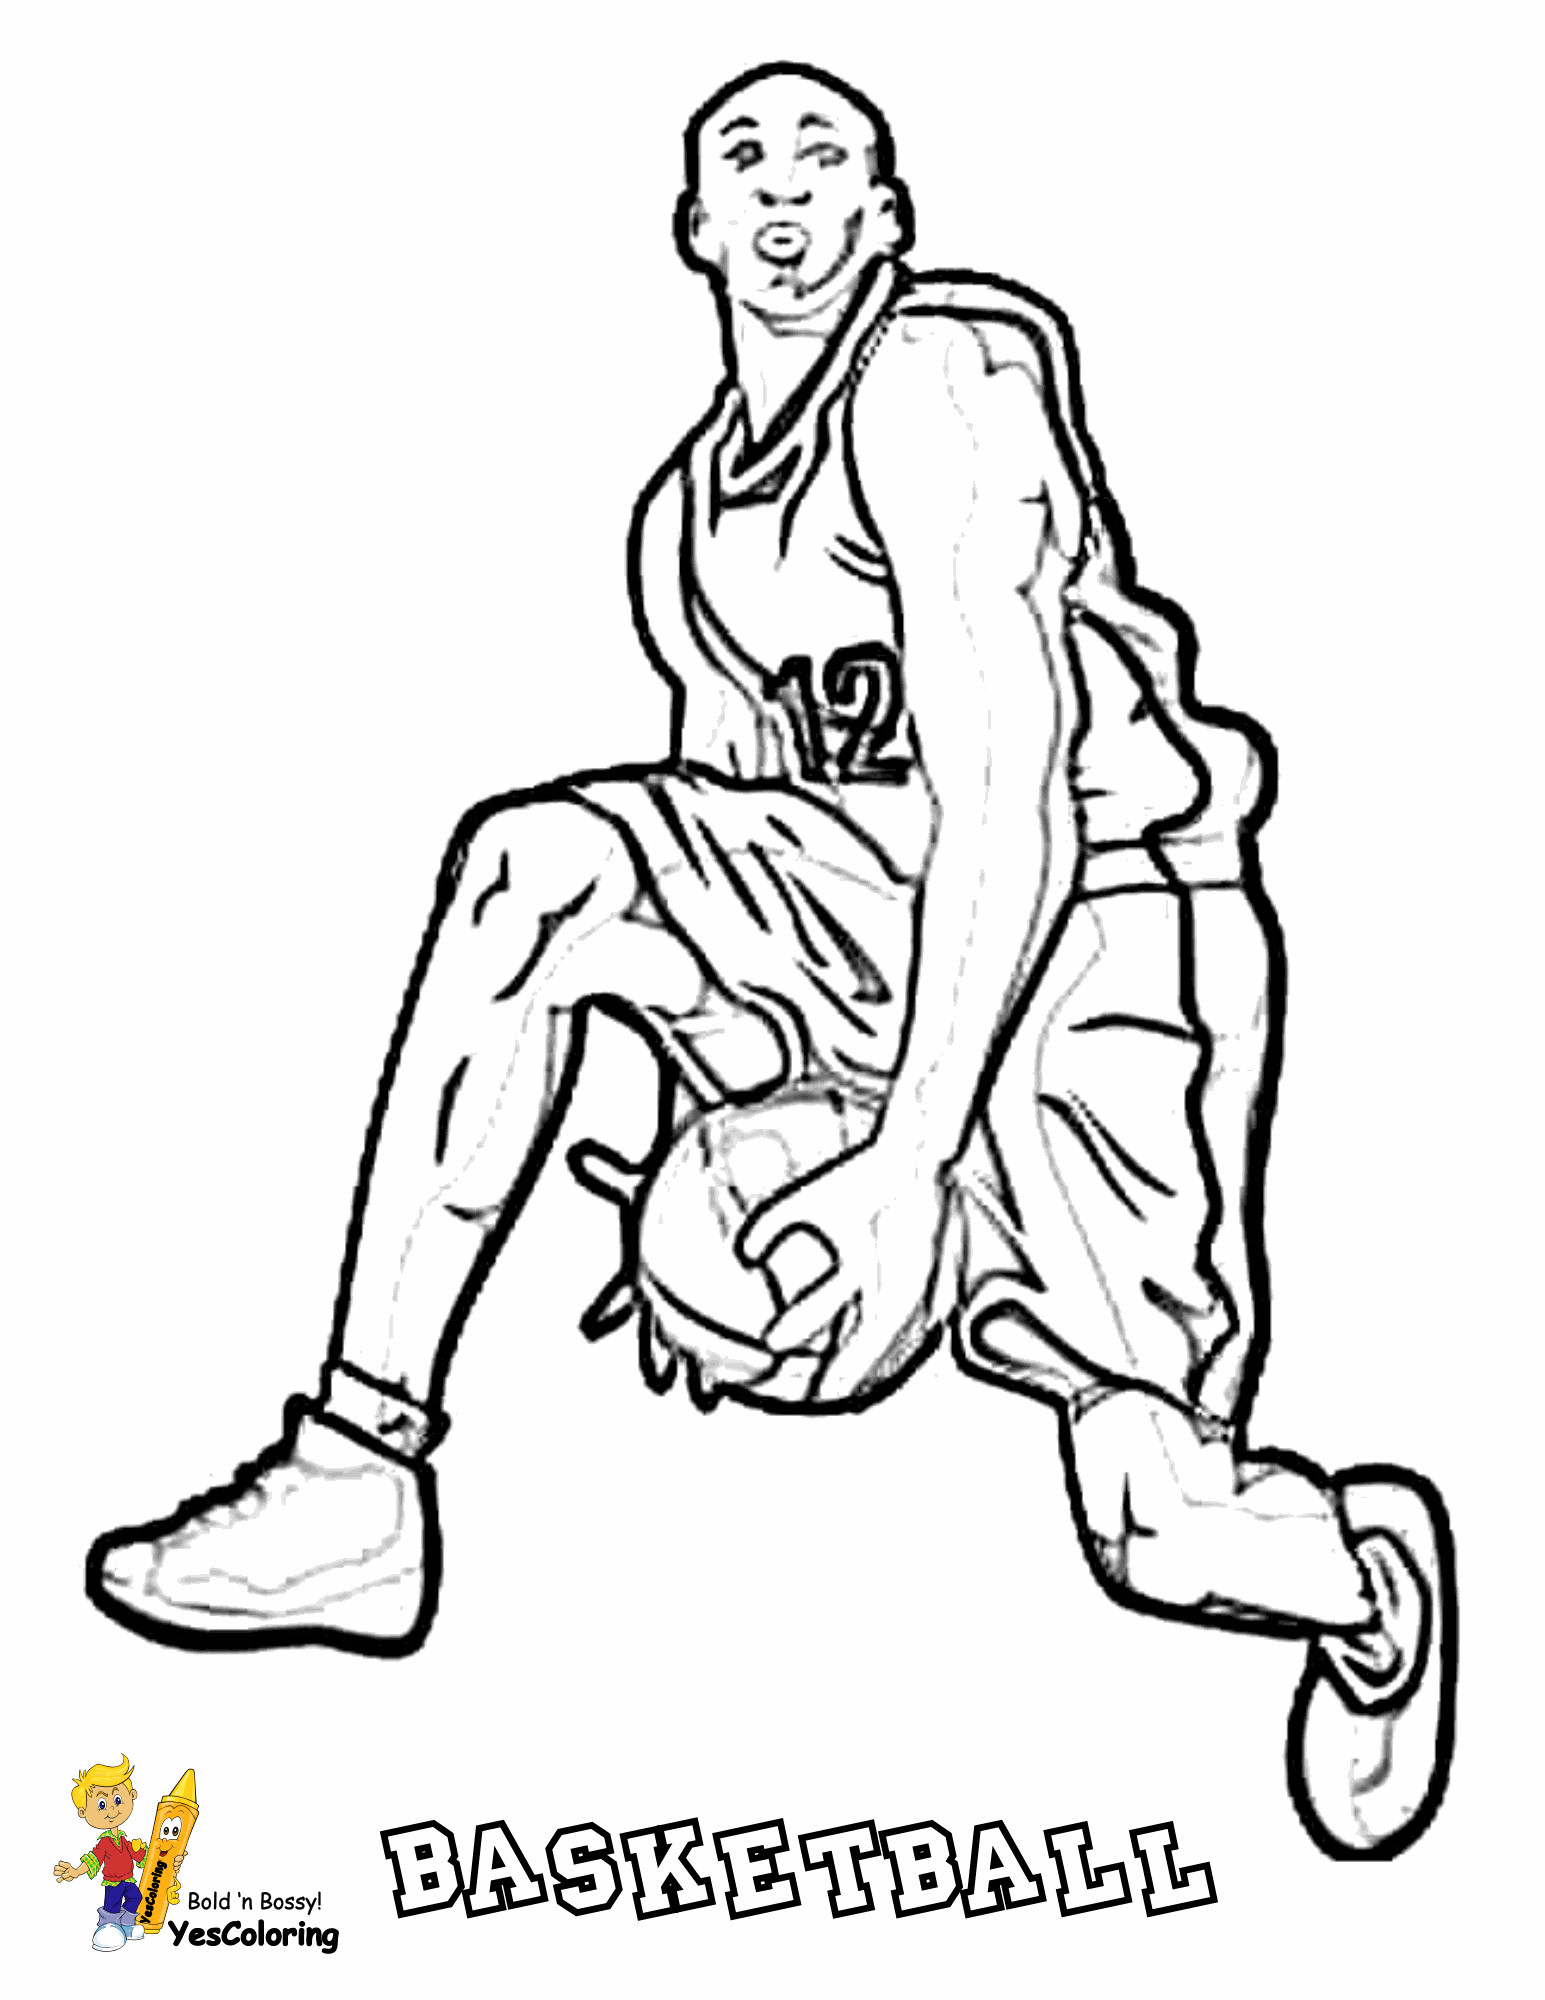 Baketball Coloring Sheets For Boys
 Big Boss Basketball Coloring